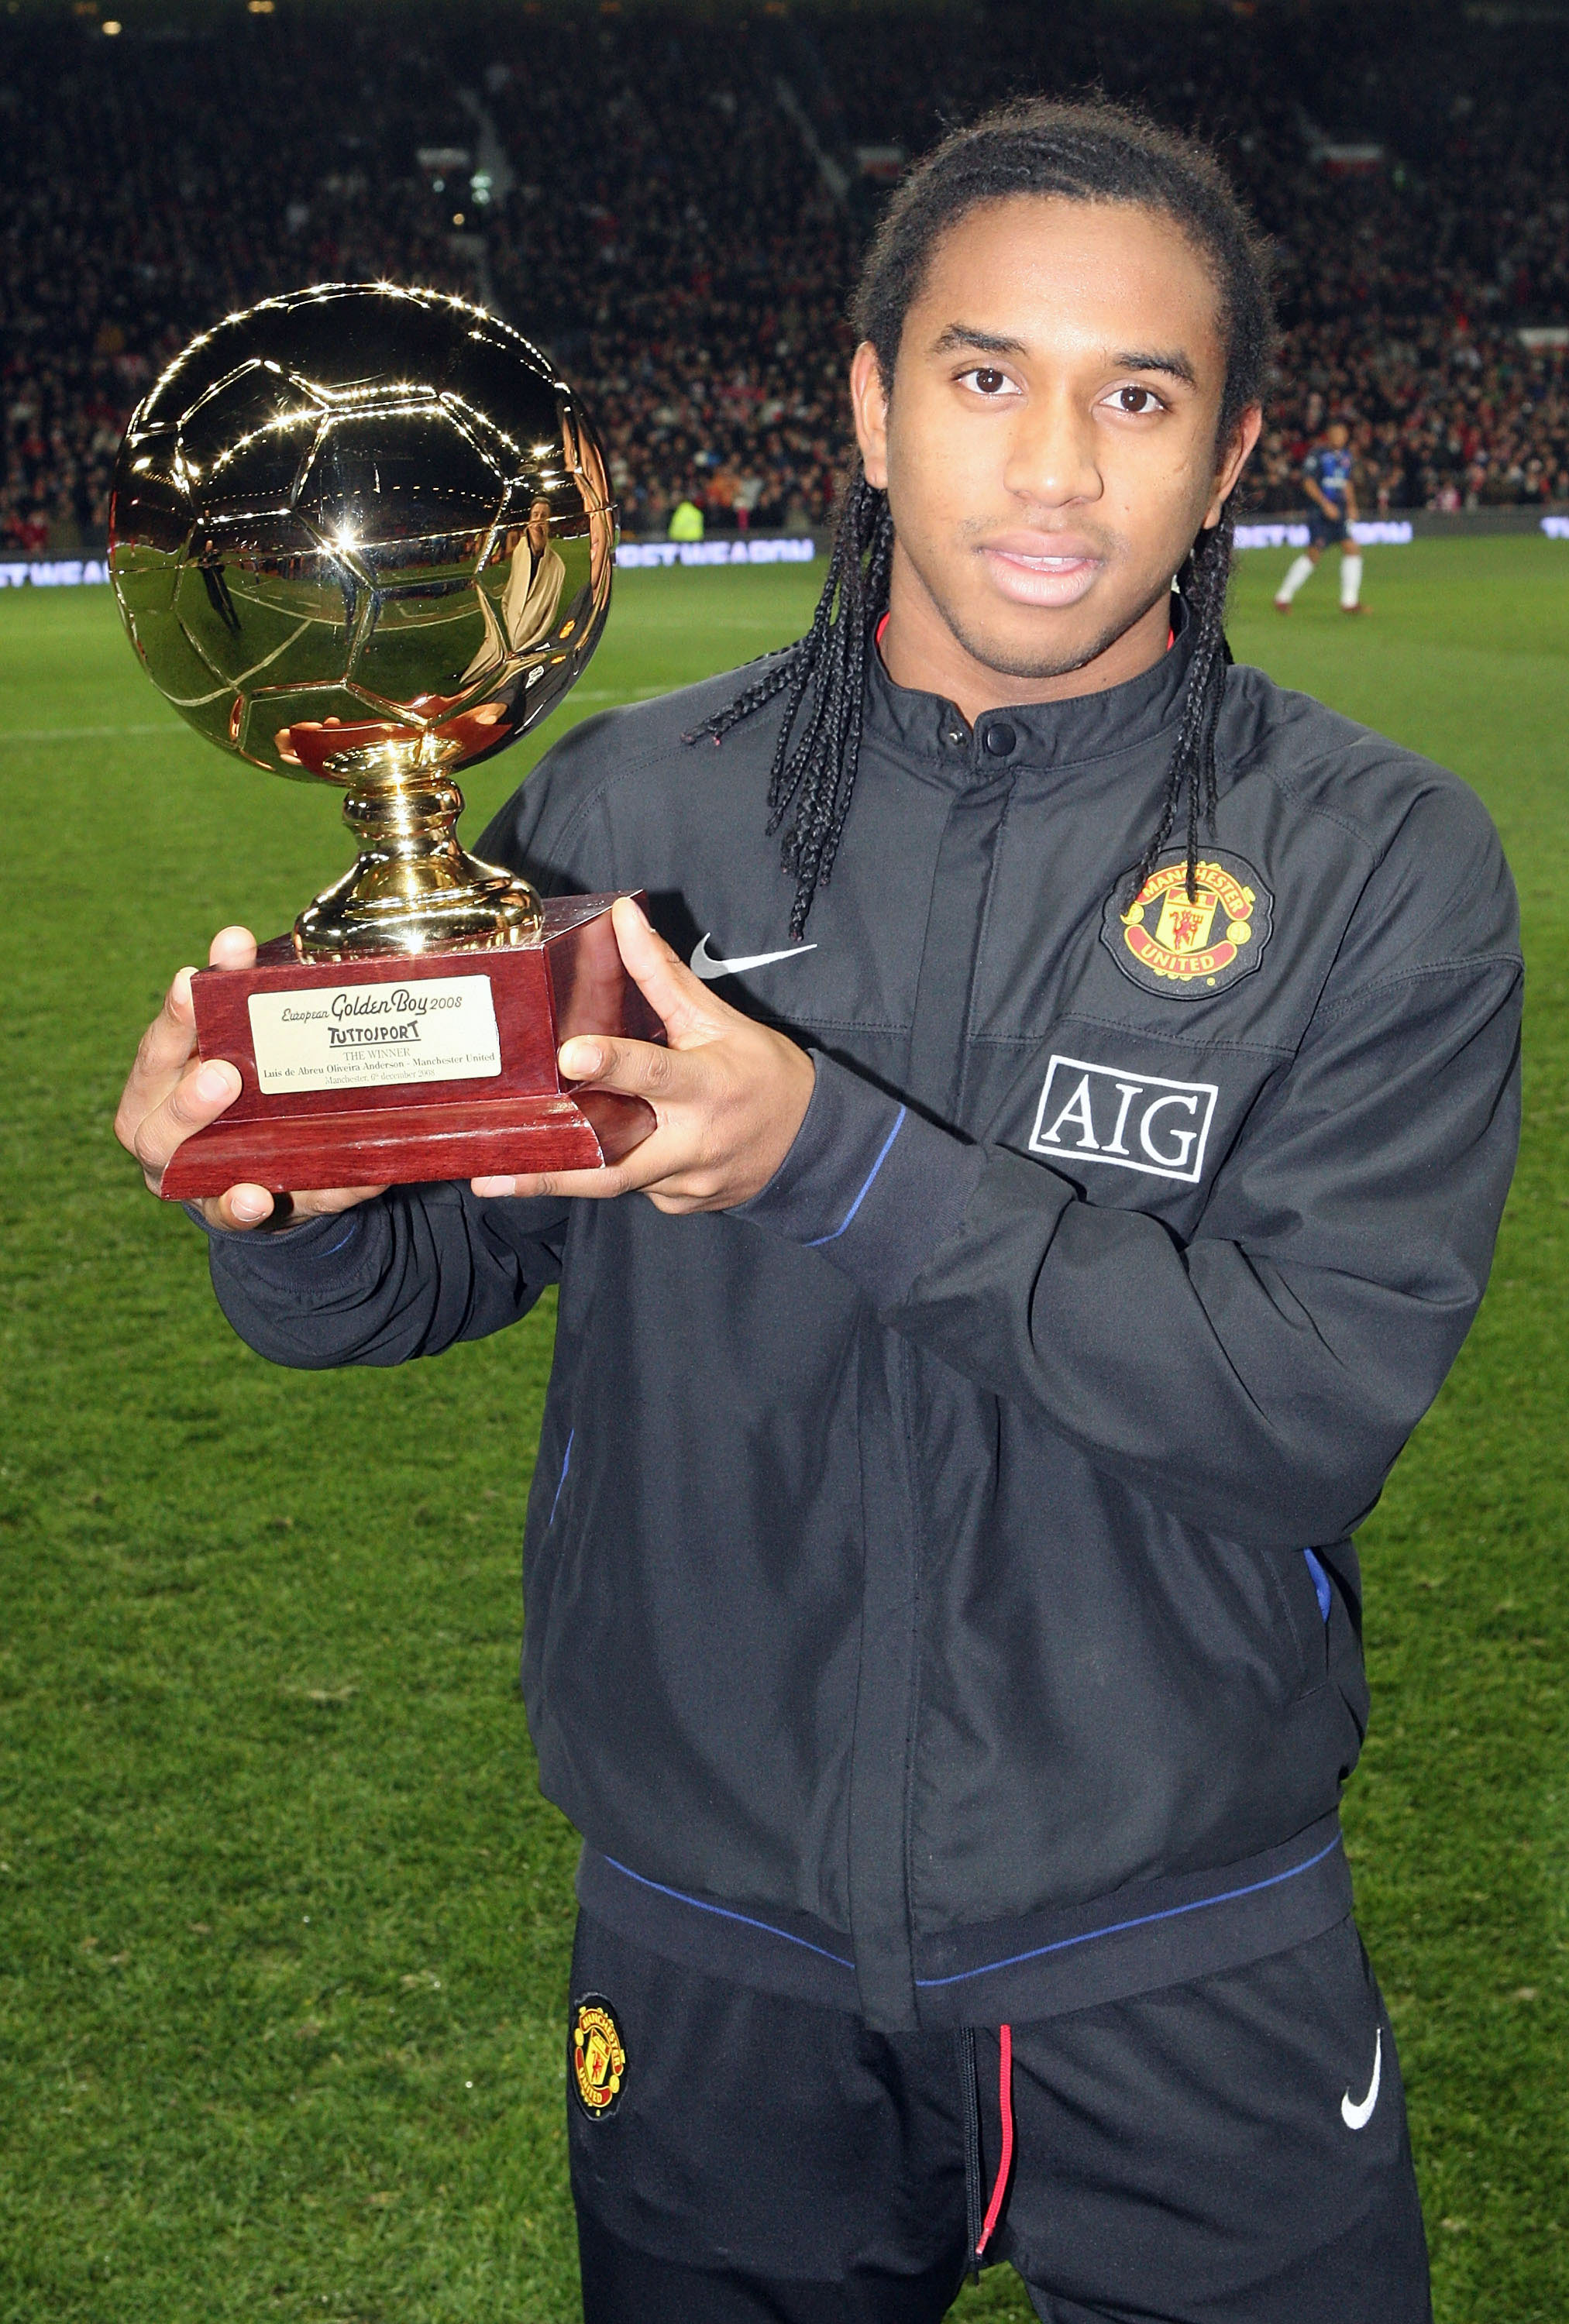 Anderson poses with his European Golden Boy award